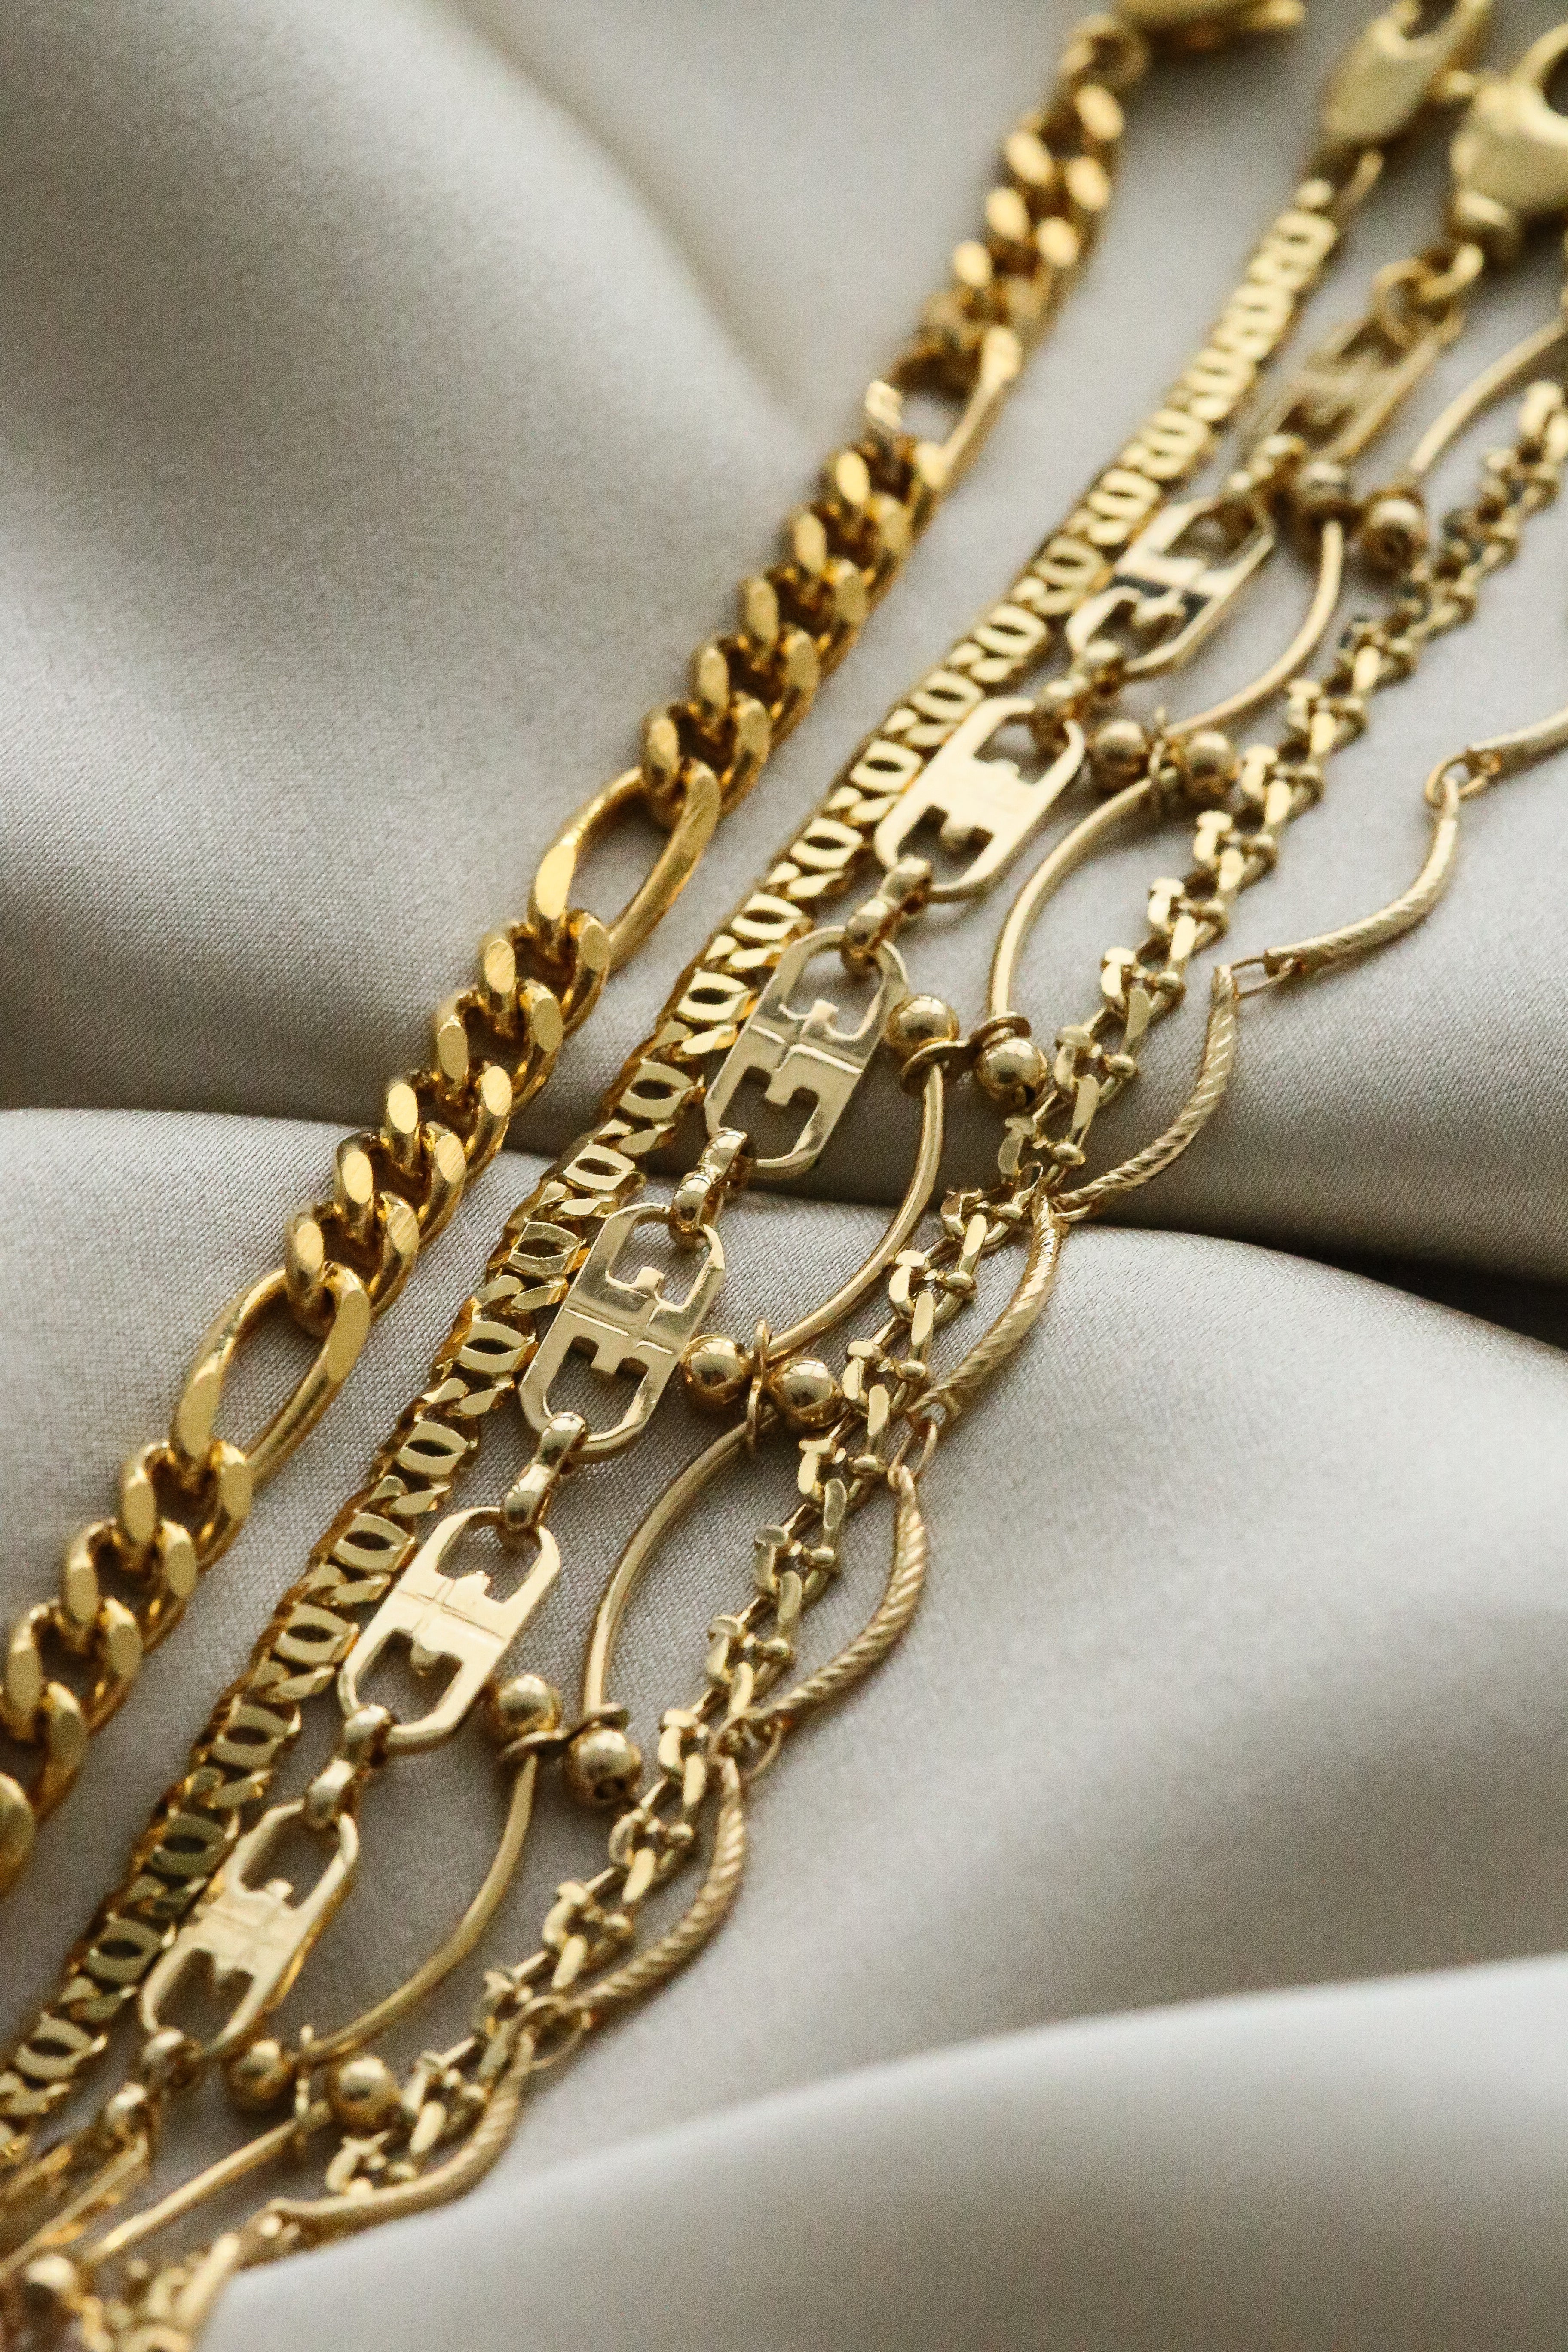 Isabella (Vintage) Chain bracelet - Boutique Minimaliste has waterproof, durable, elegant and vintage inspired jewelry